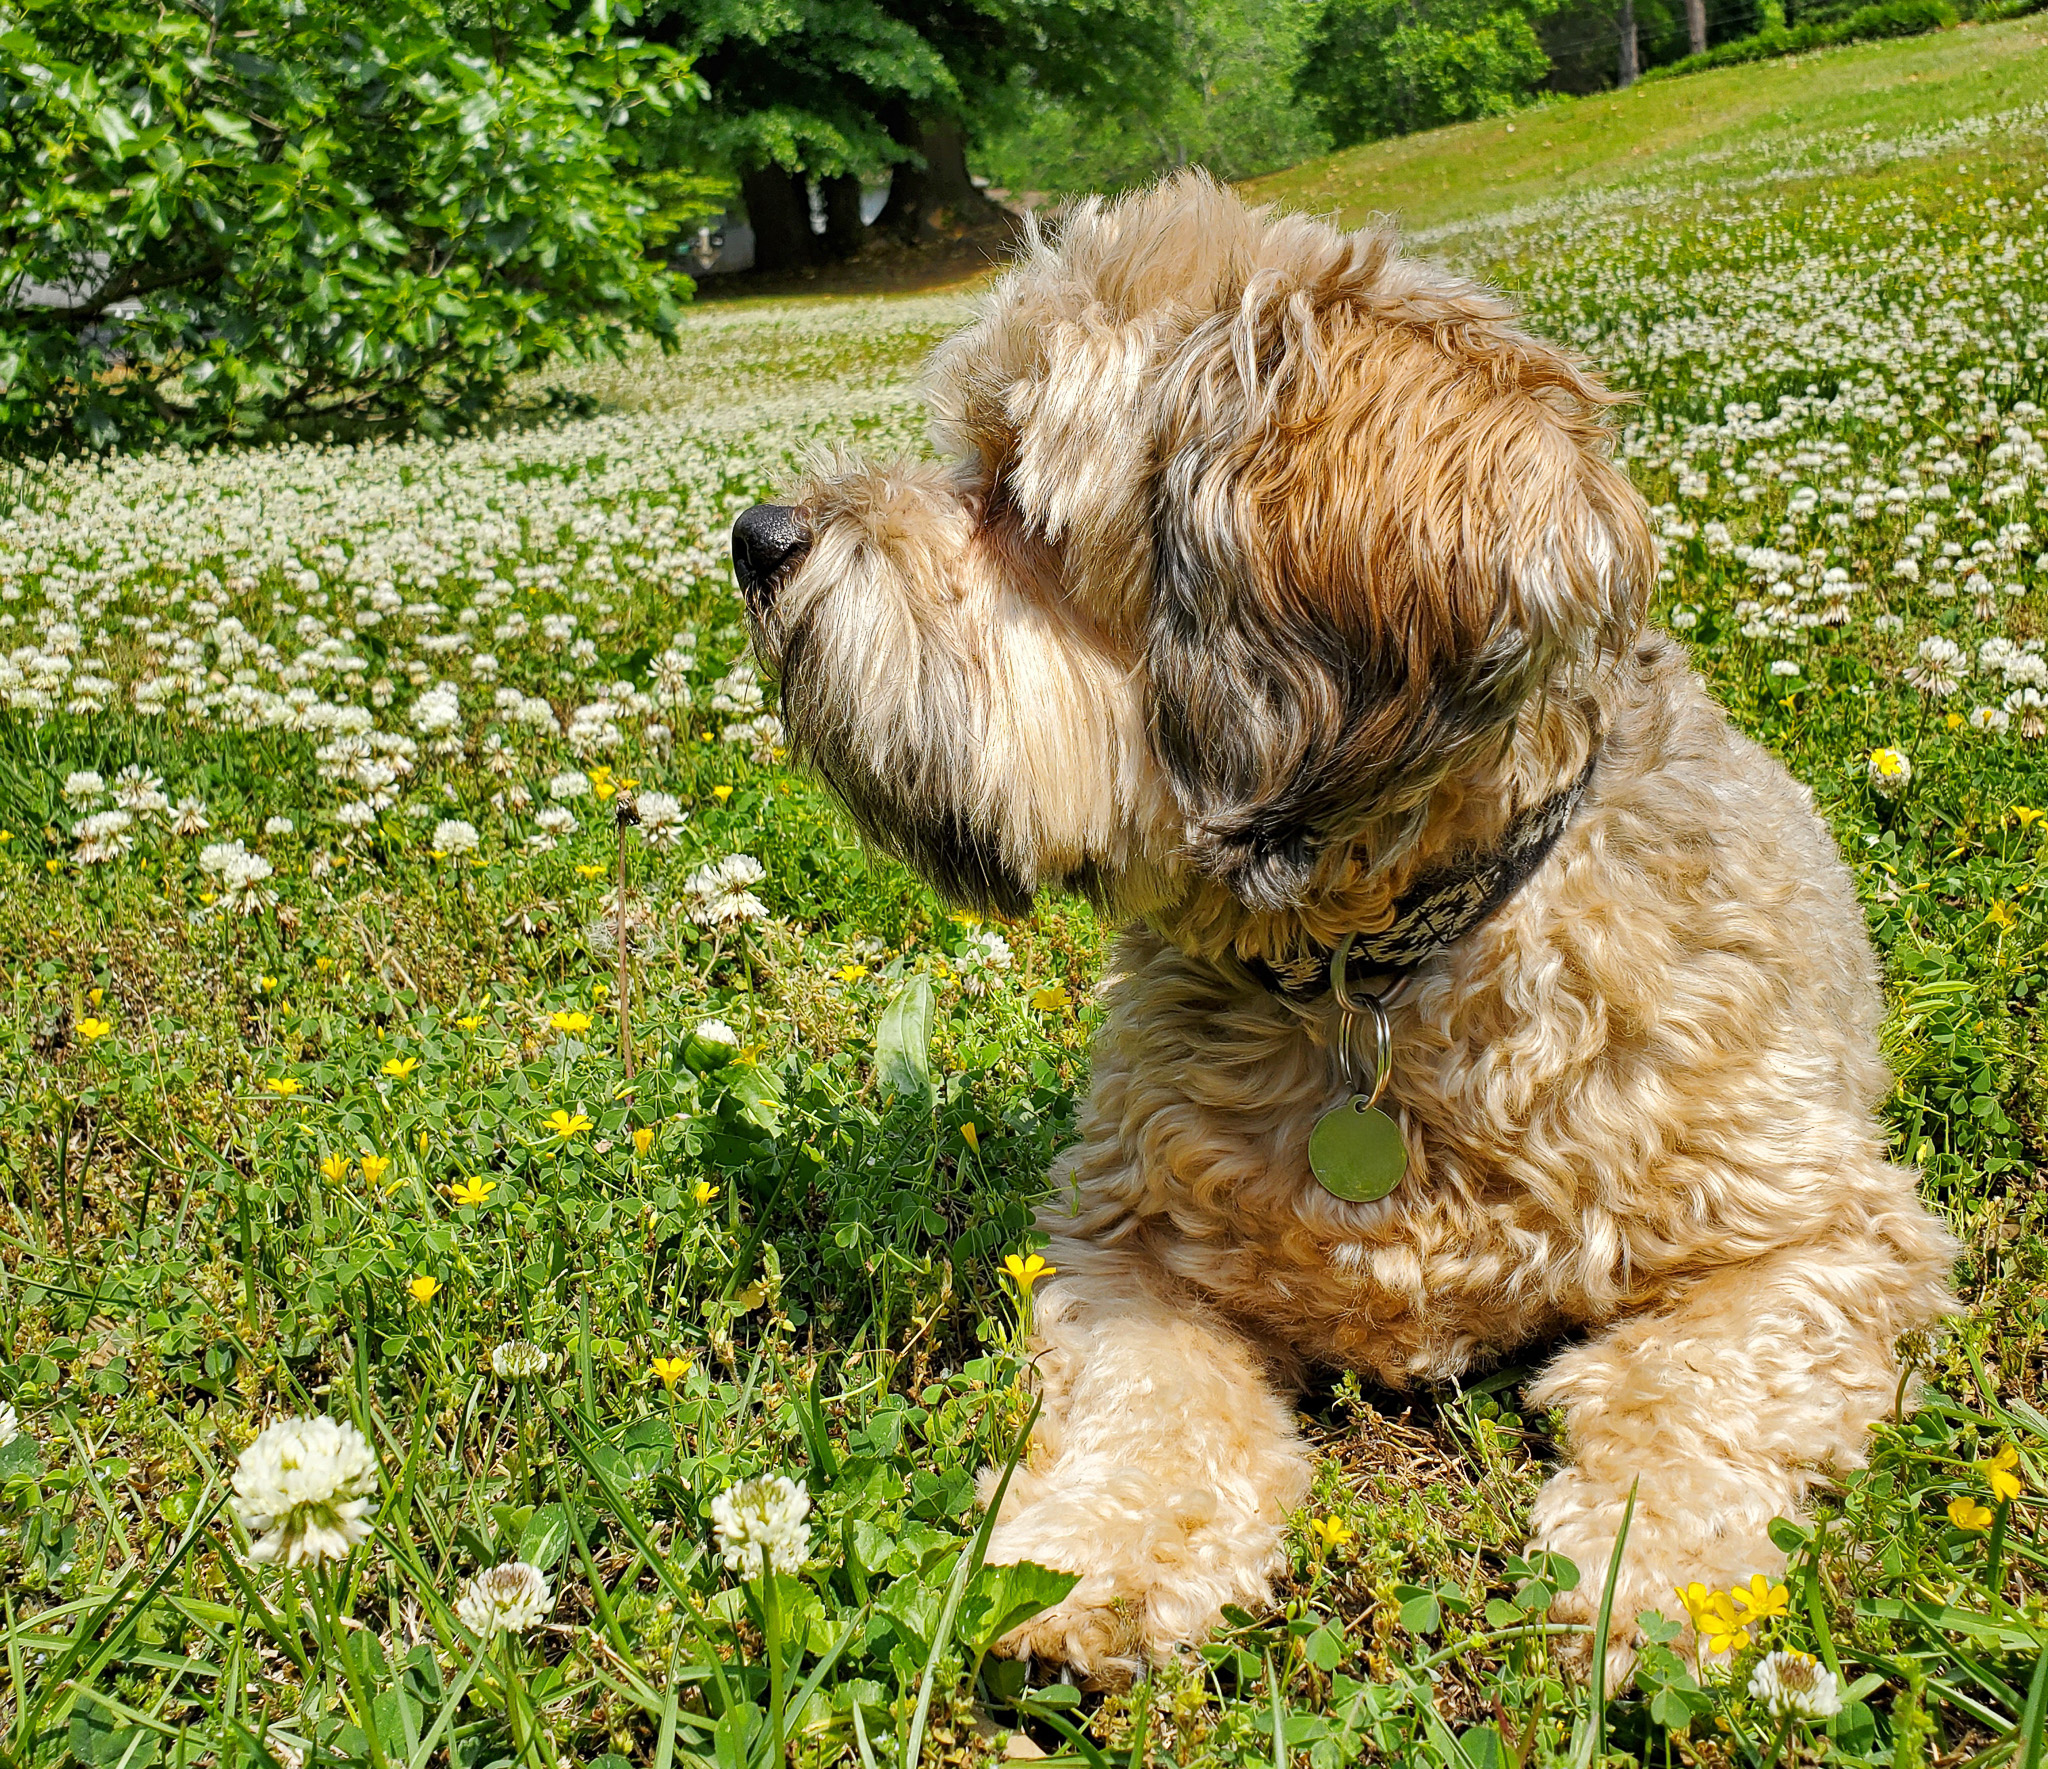 A dog sunning on a clover lawn